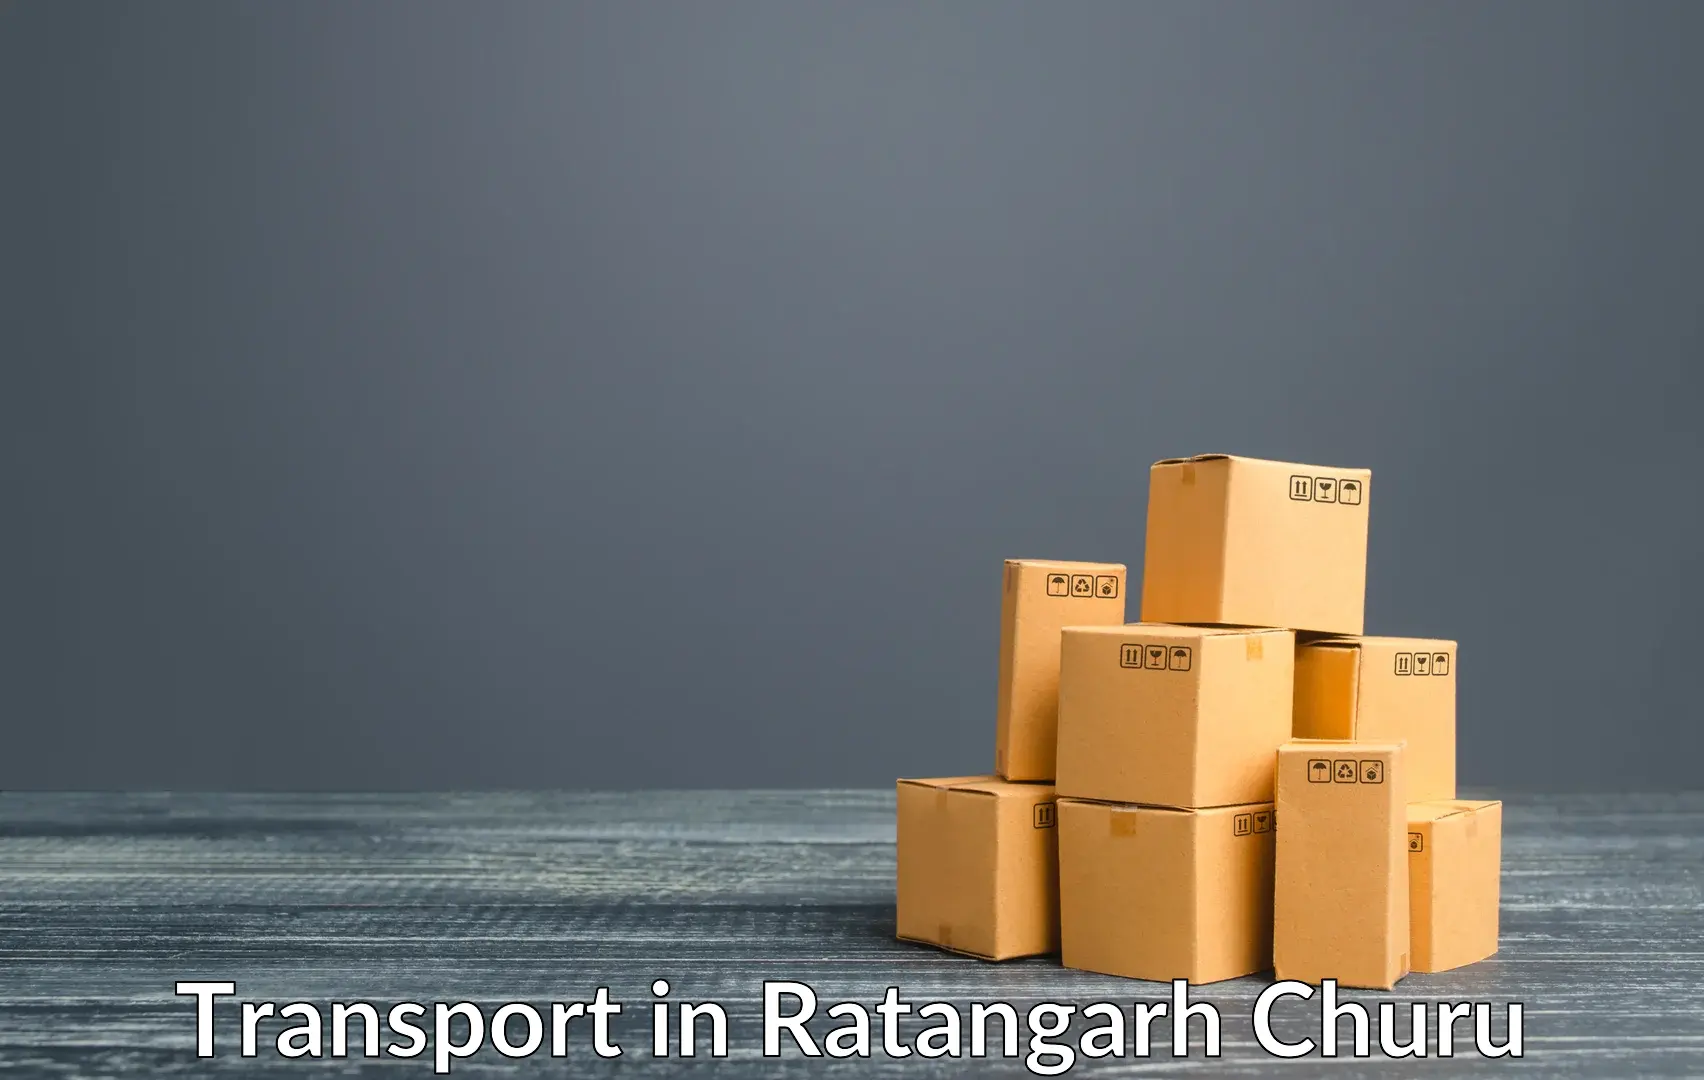 Air freight transport services in Ratangarh Churu